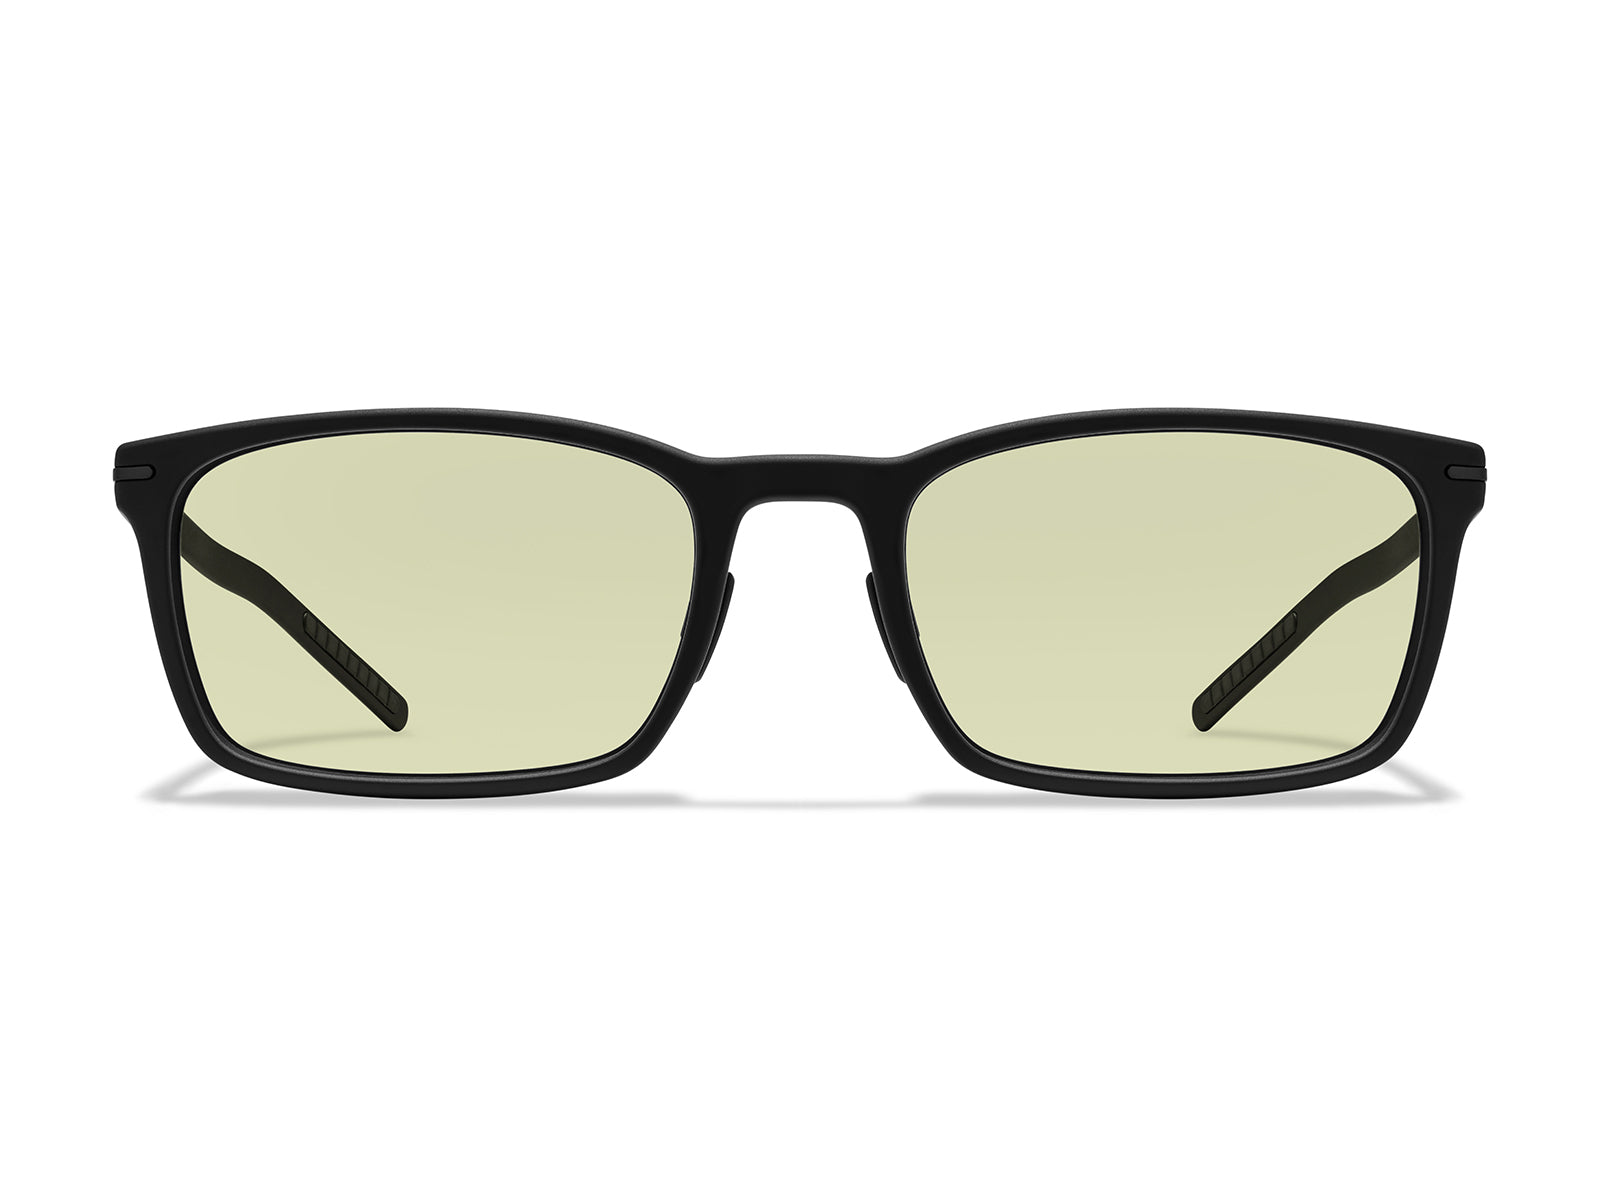 Roka Palmer Sunglasses with Sandalwood Frames - Dark Carbon (Polarized) Lens